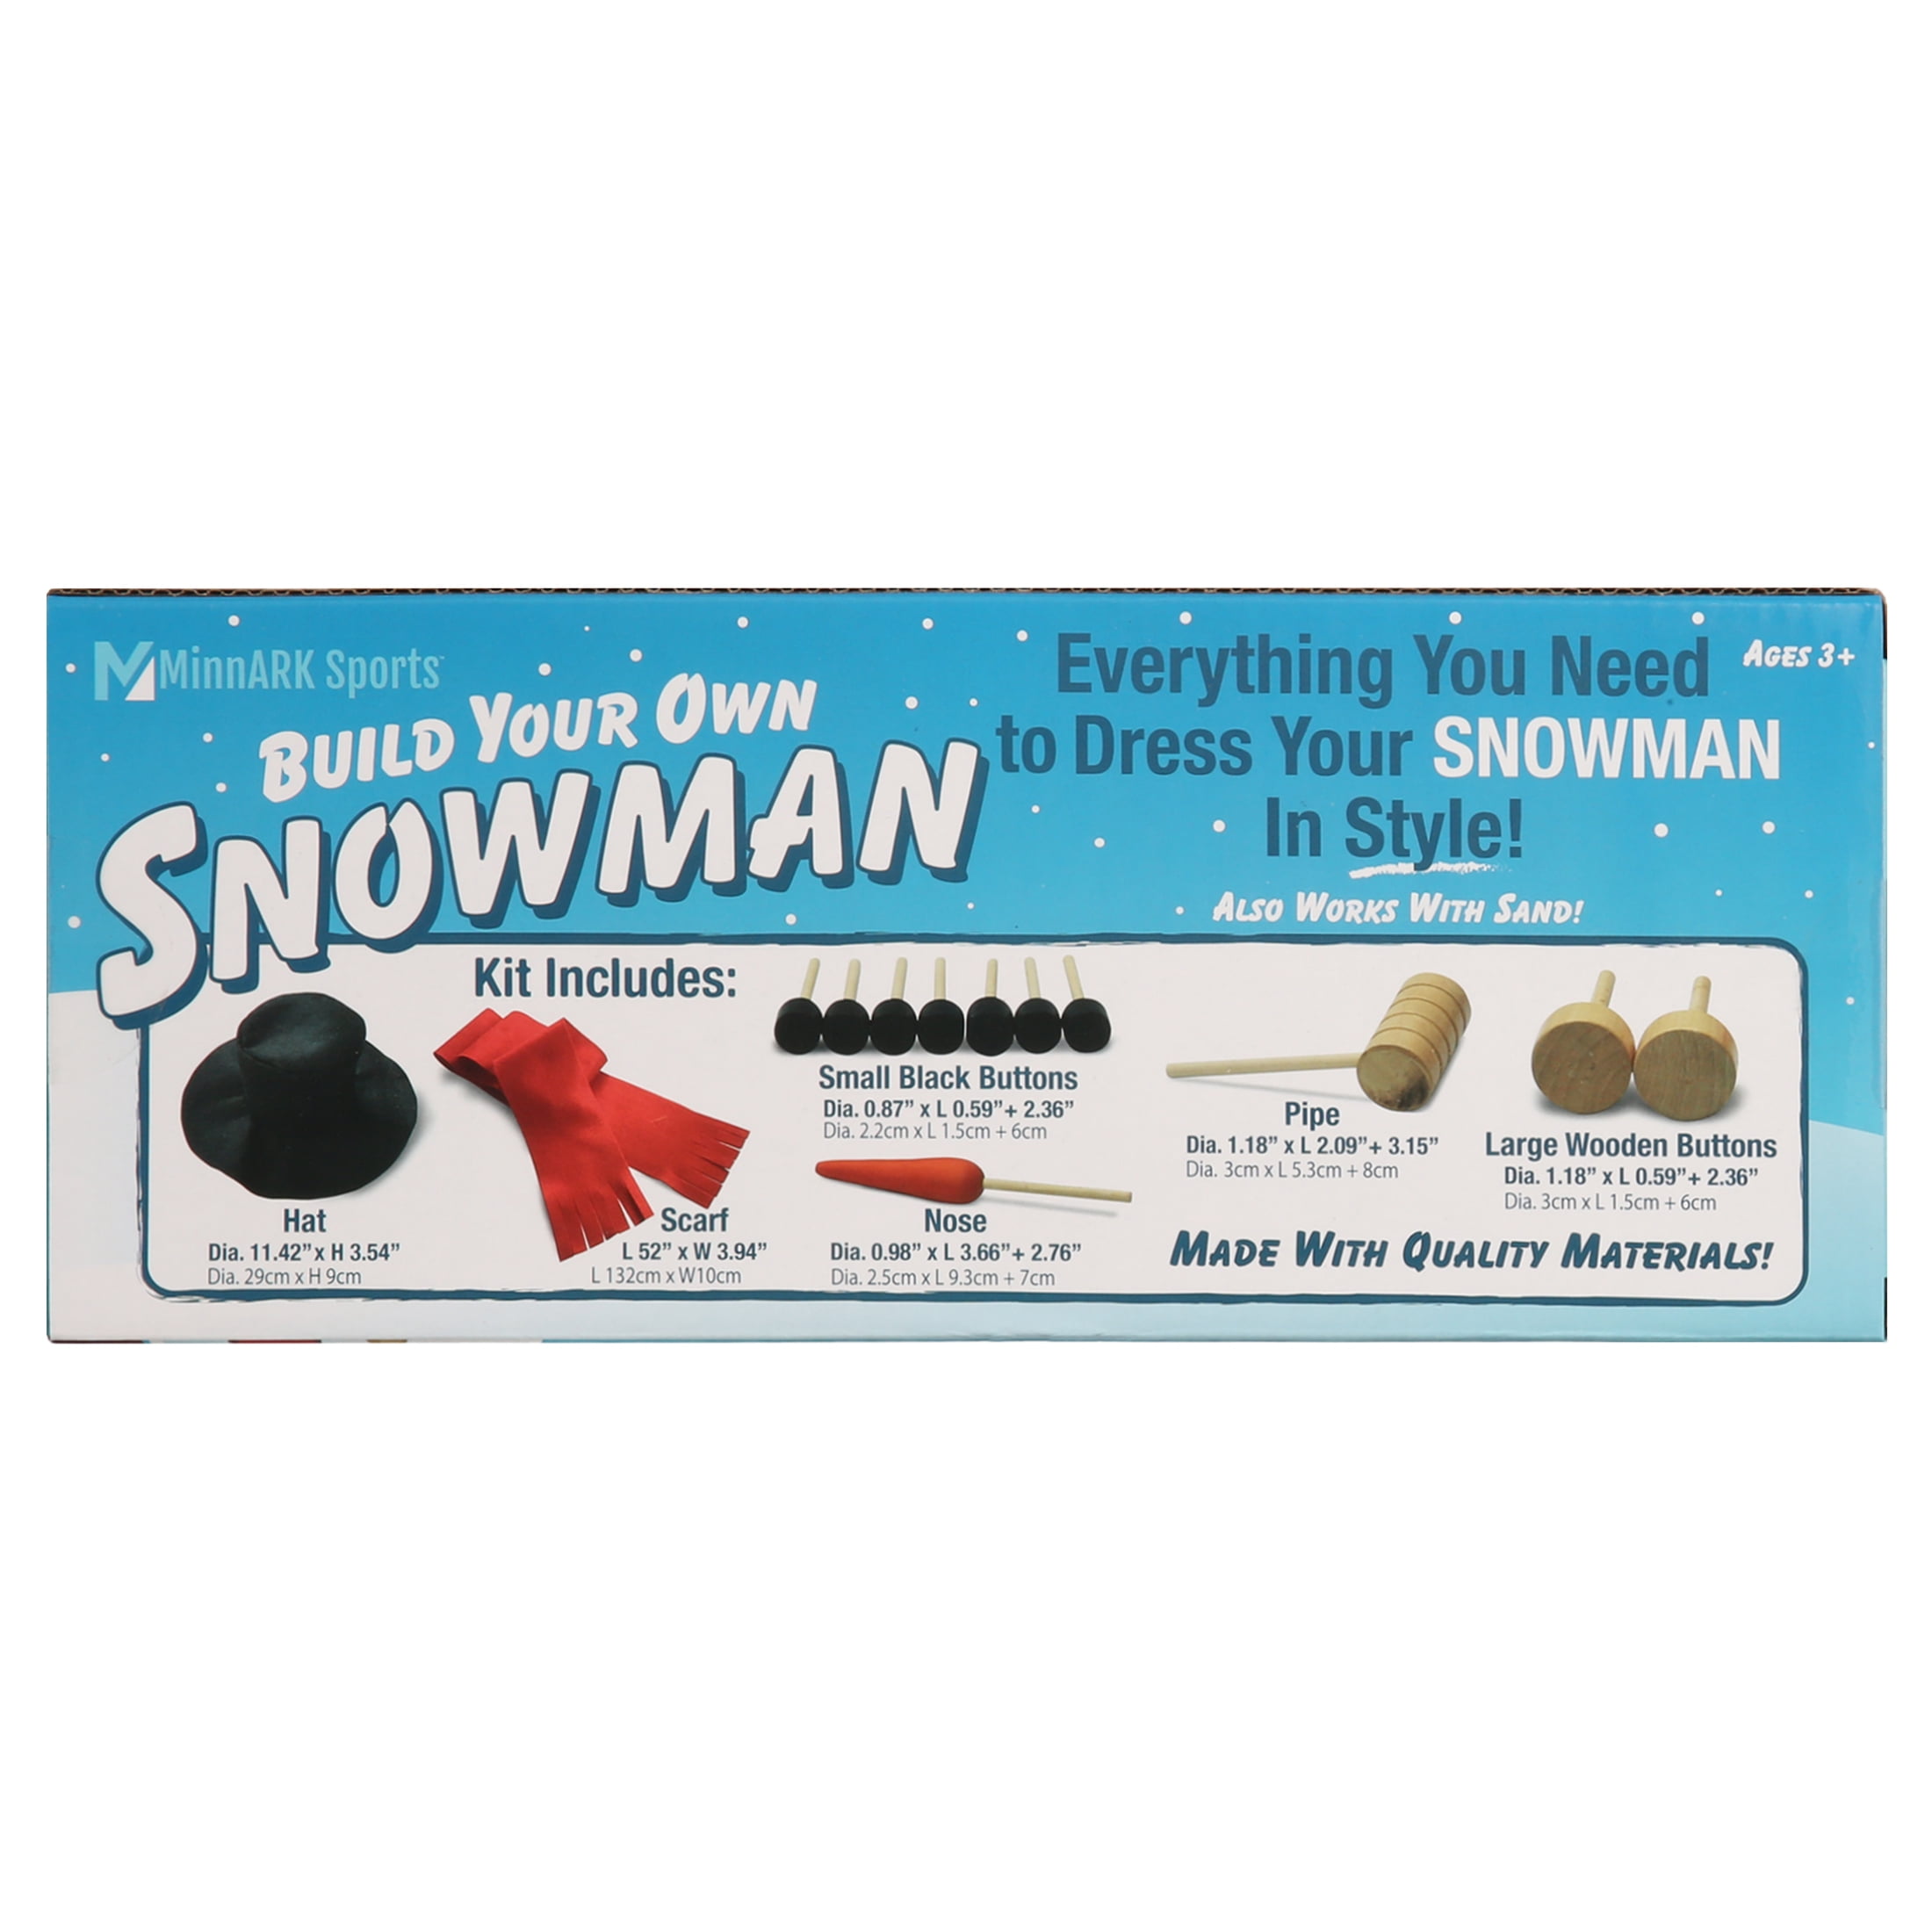 DIY Build a Snowman Kit | Design #1474